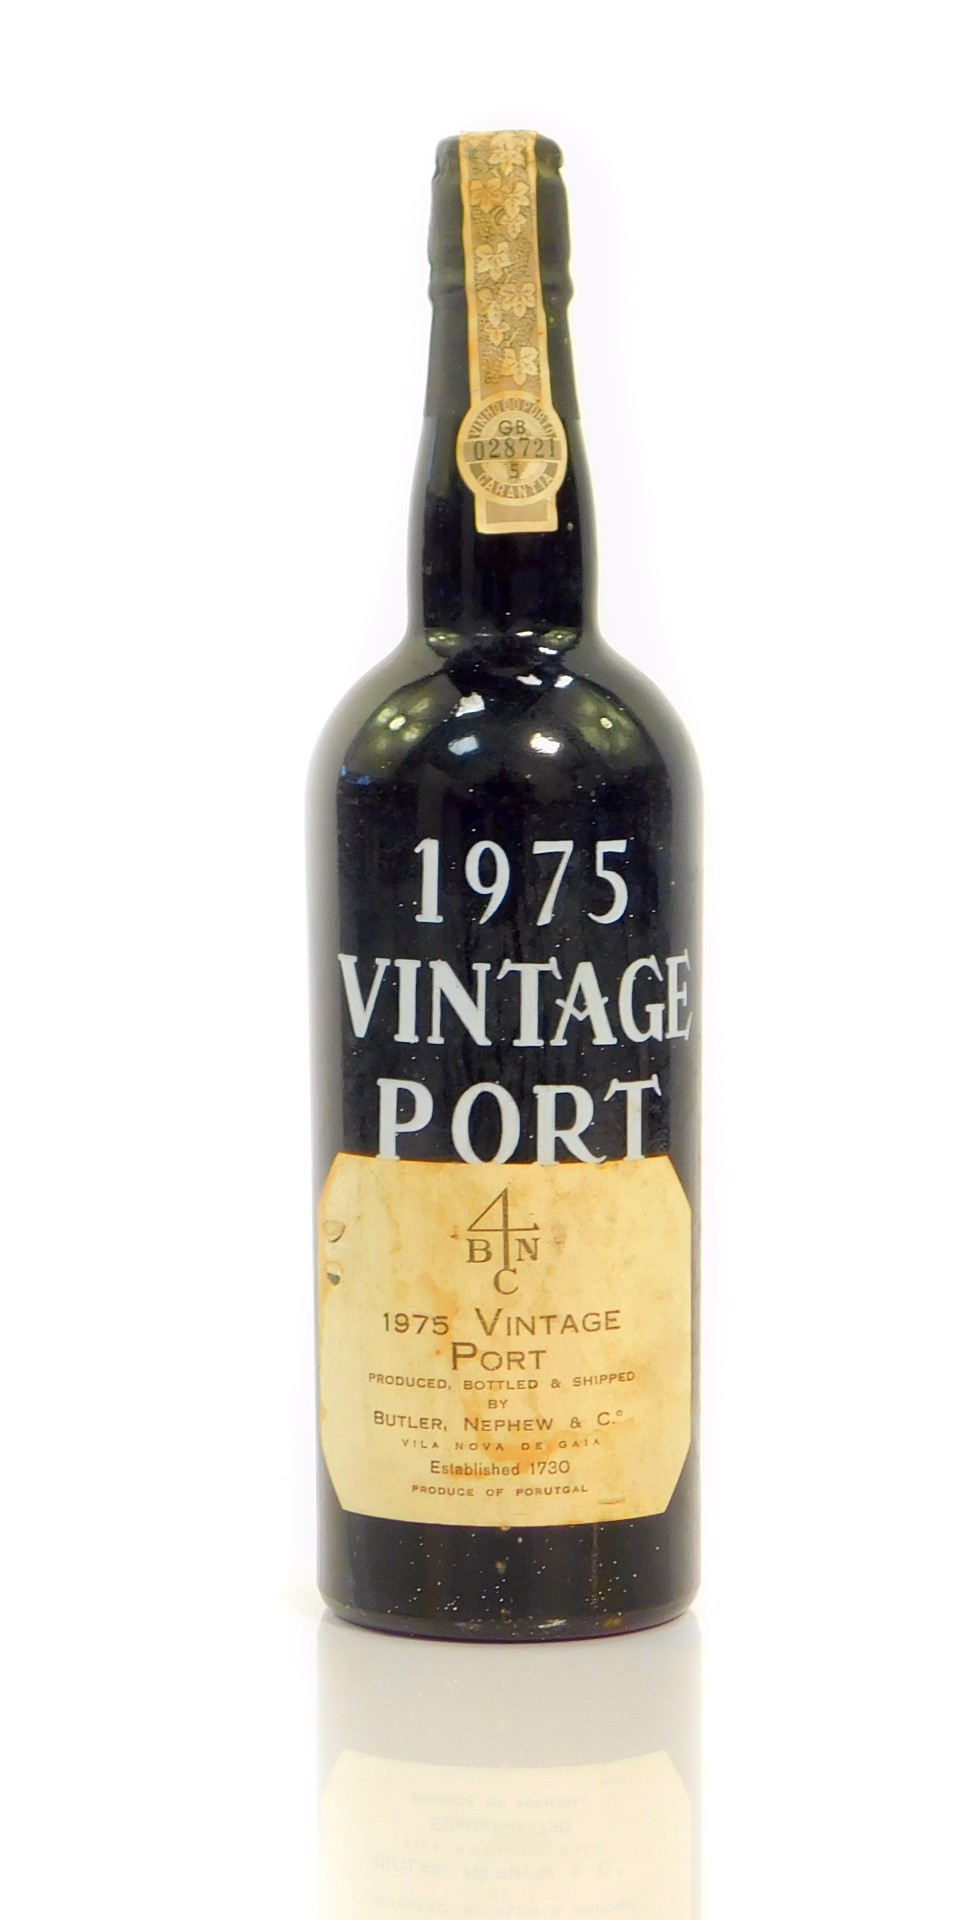 A bottle of Butler Nephew & Company vintage port 1975.